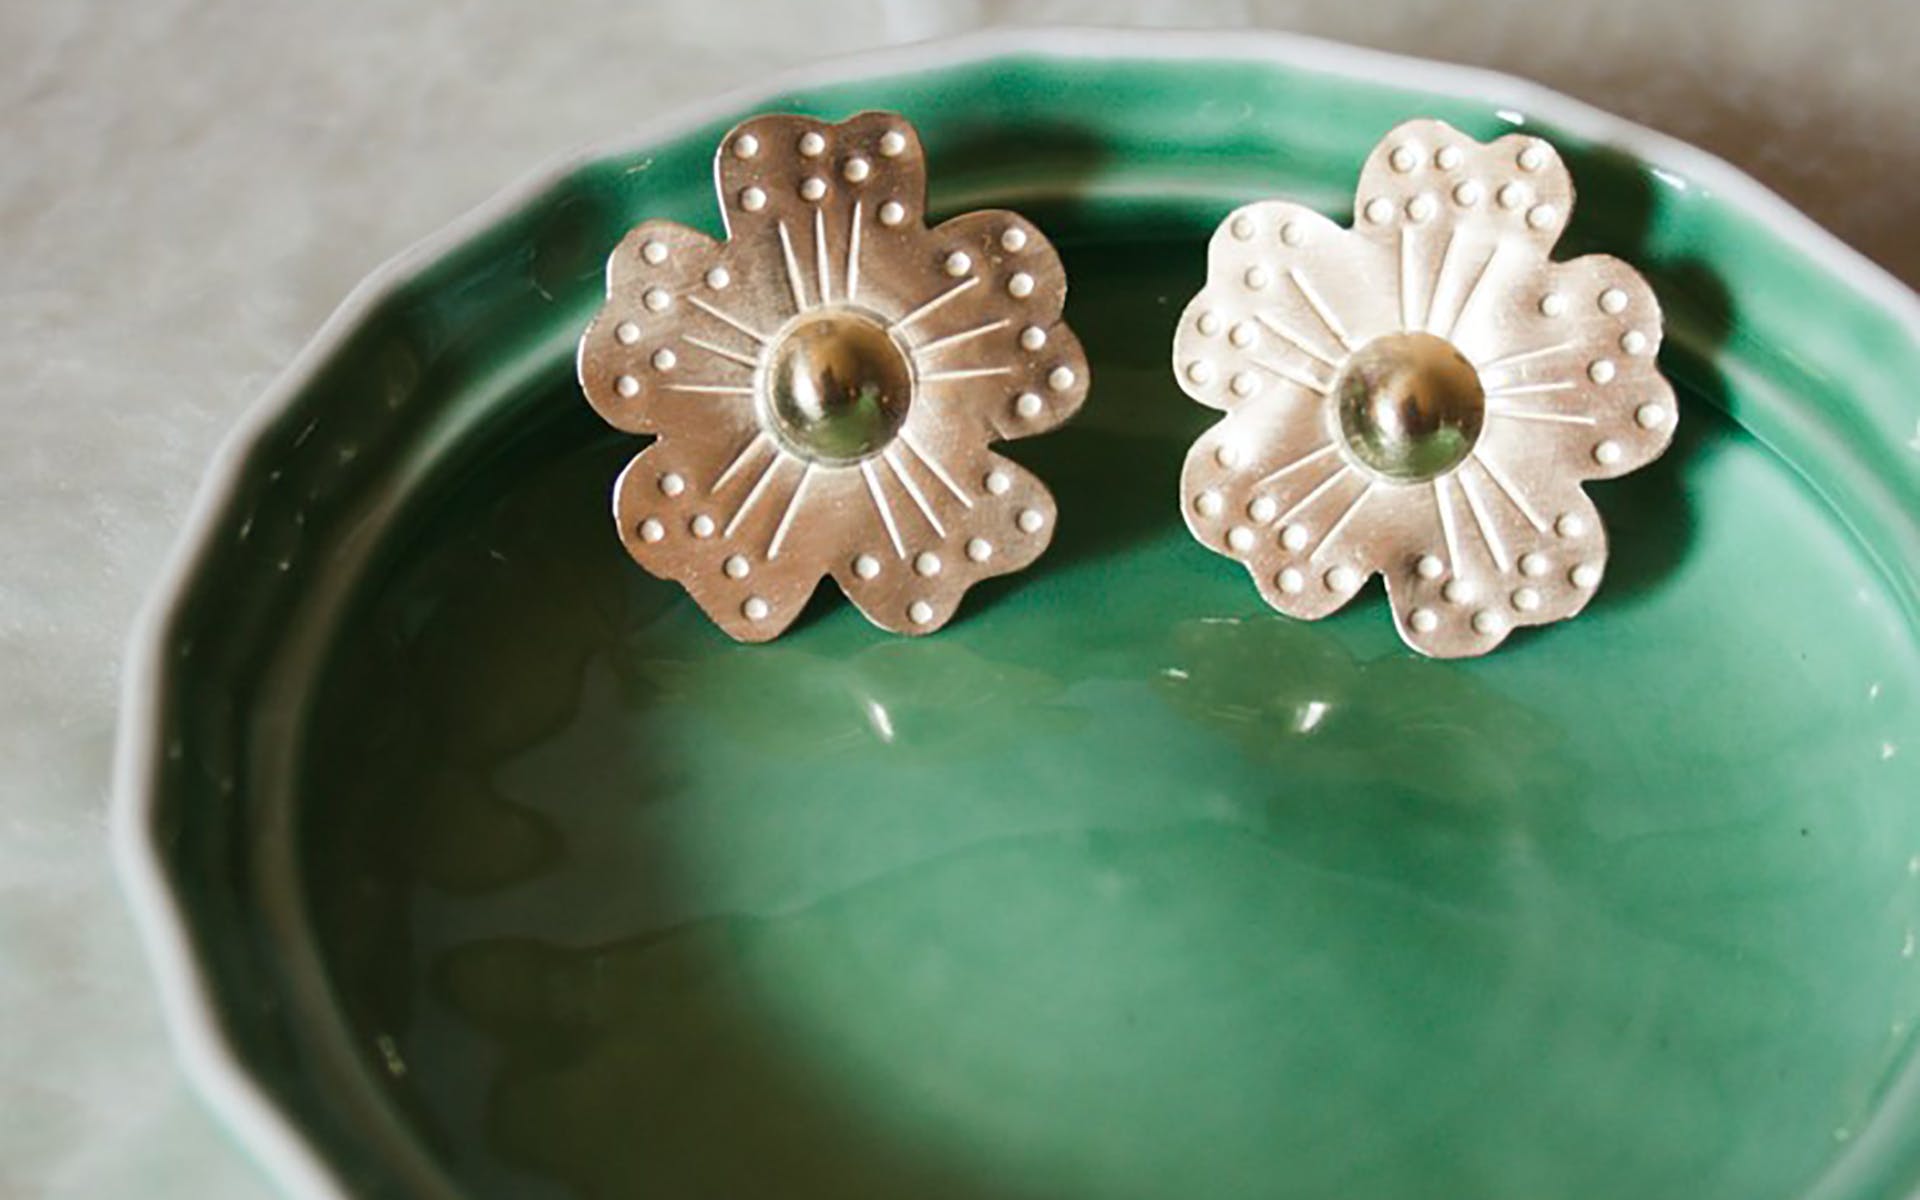 Image of flower shaped, metal earrings sitting on green ceramic dish